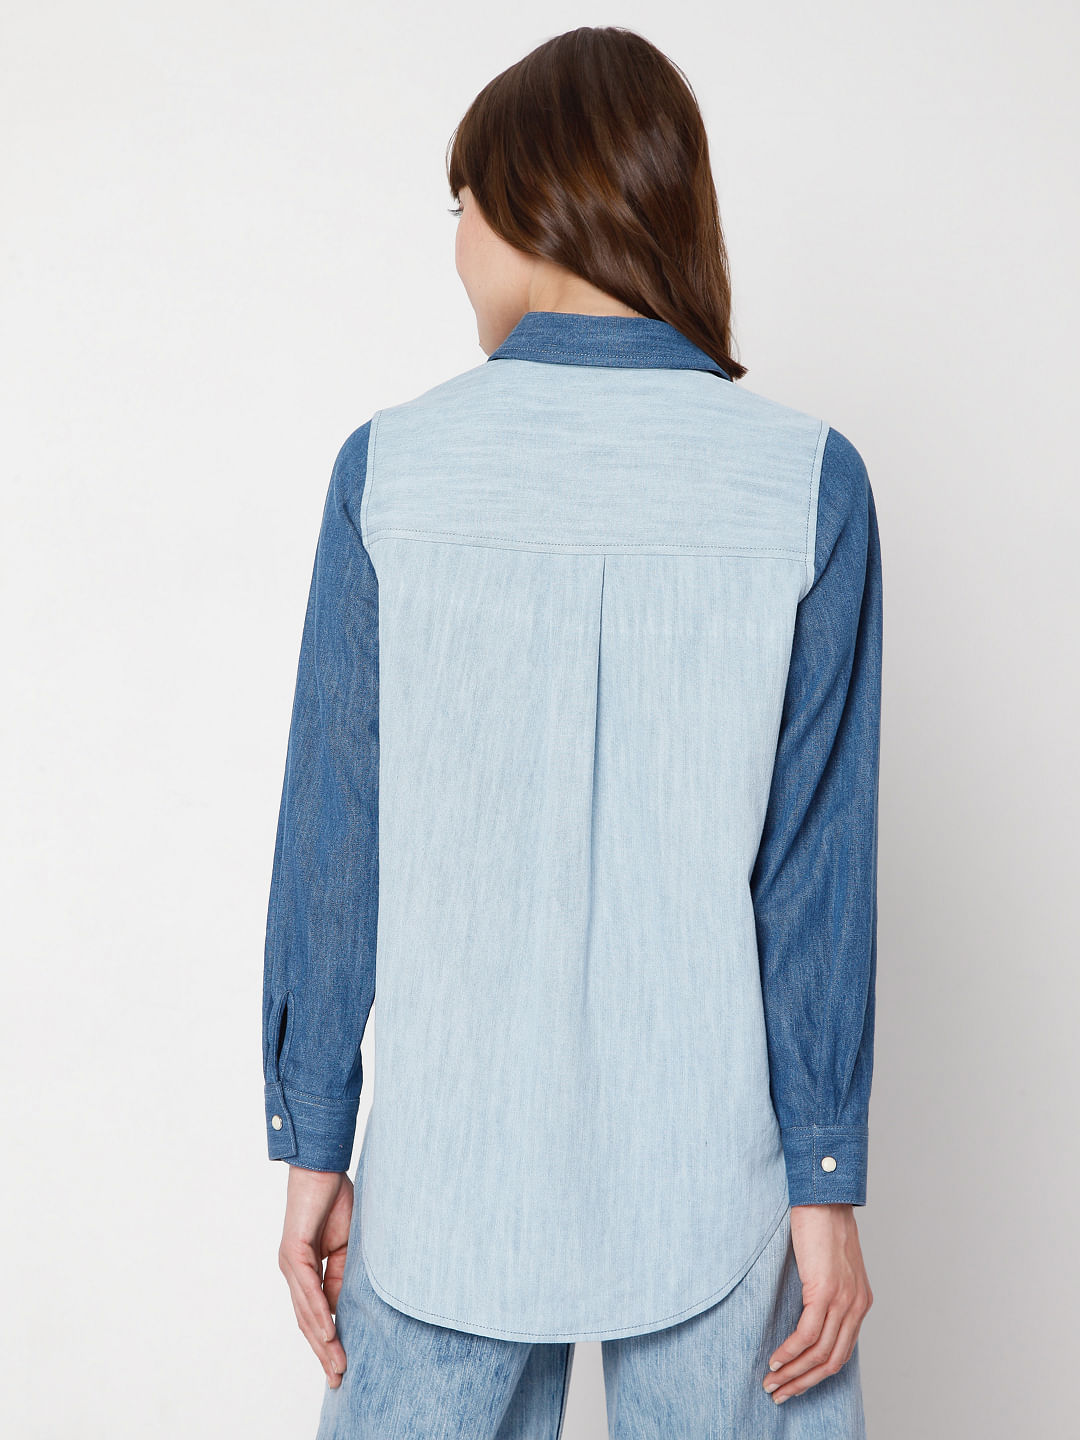 Buy Ladyful Women's Sleeveless Denim Vest V Neck Button Down Jean Waistcoat  Jacket, Light Blue, X-Small at Amazon.in